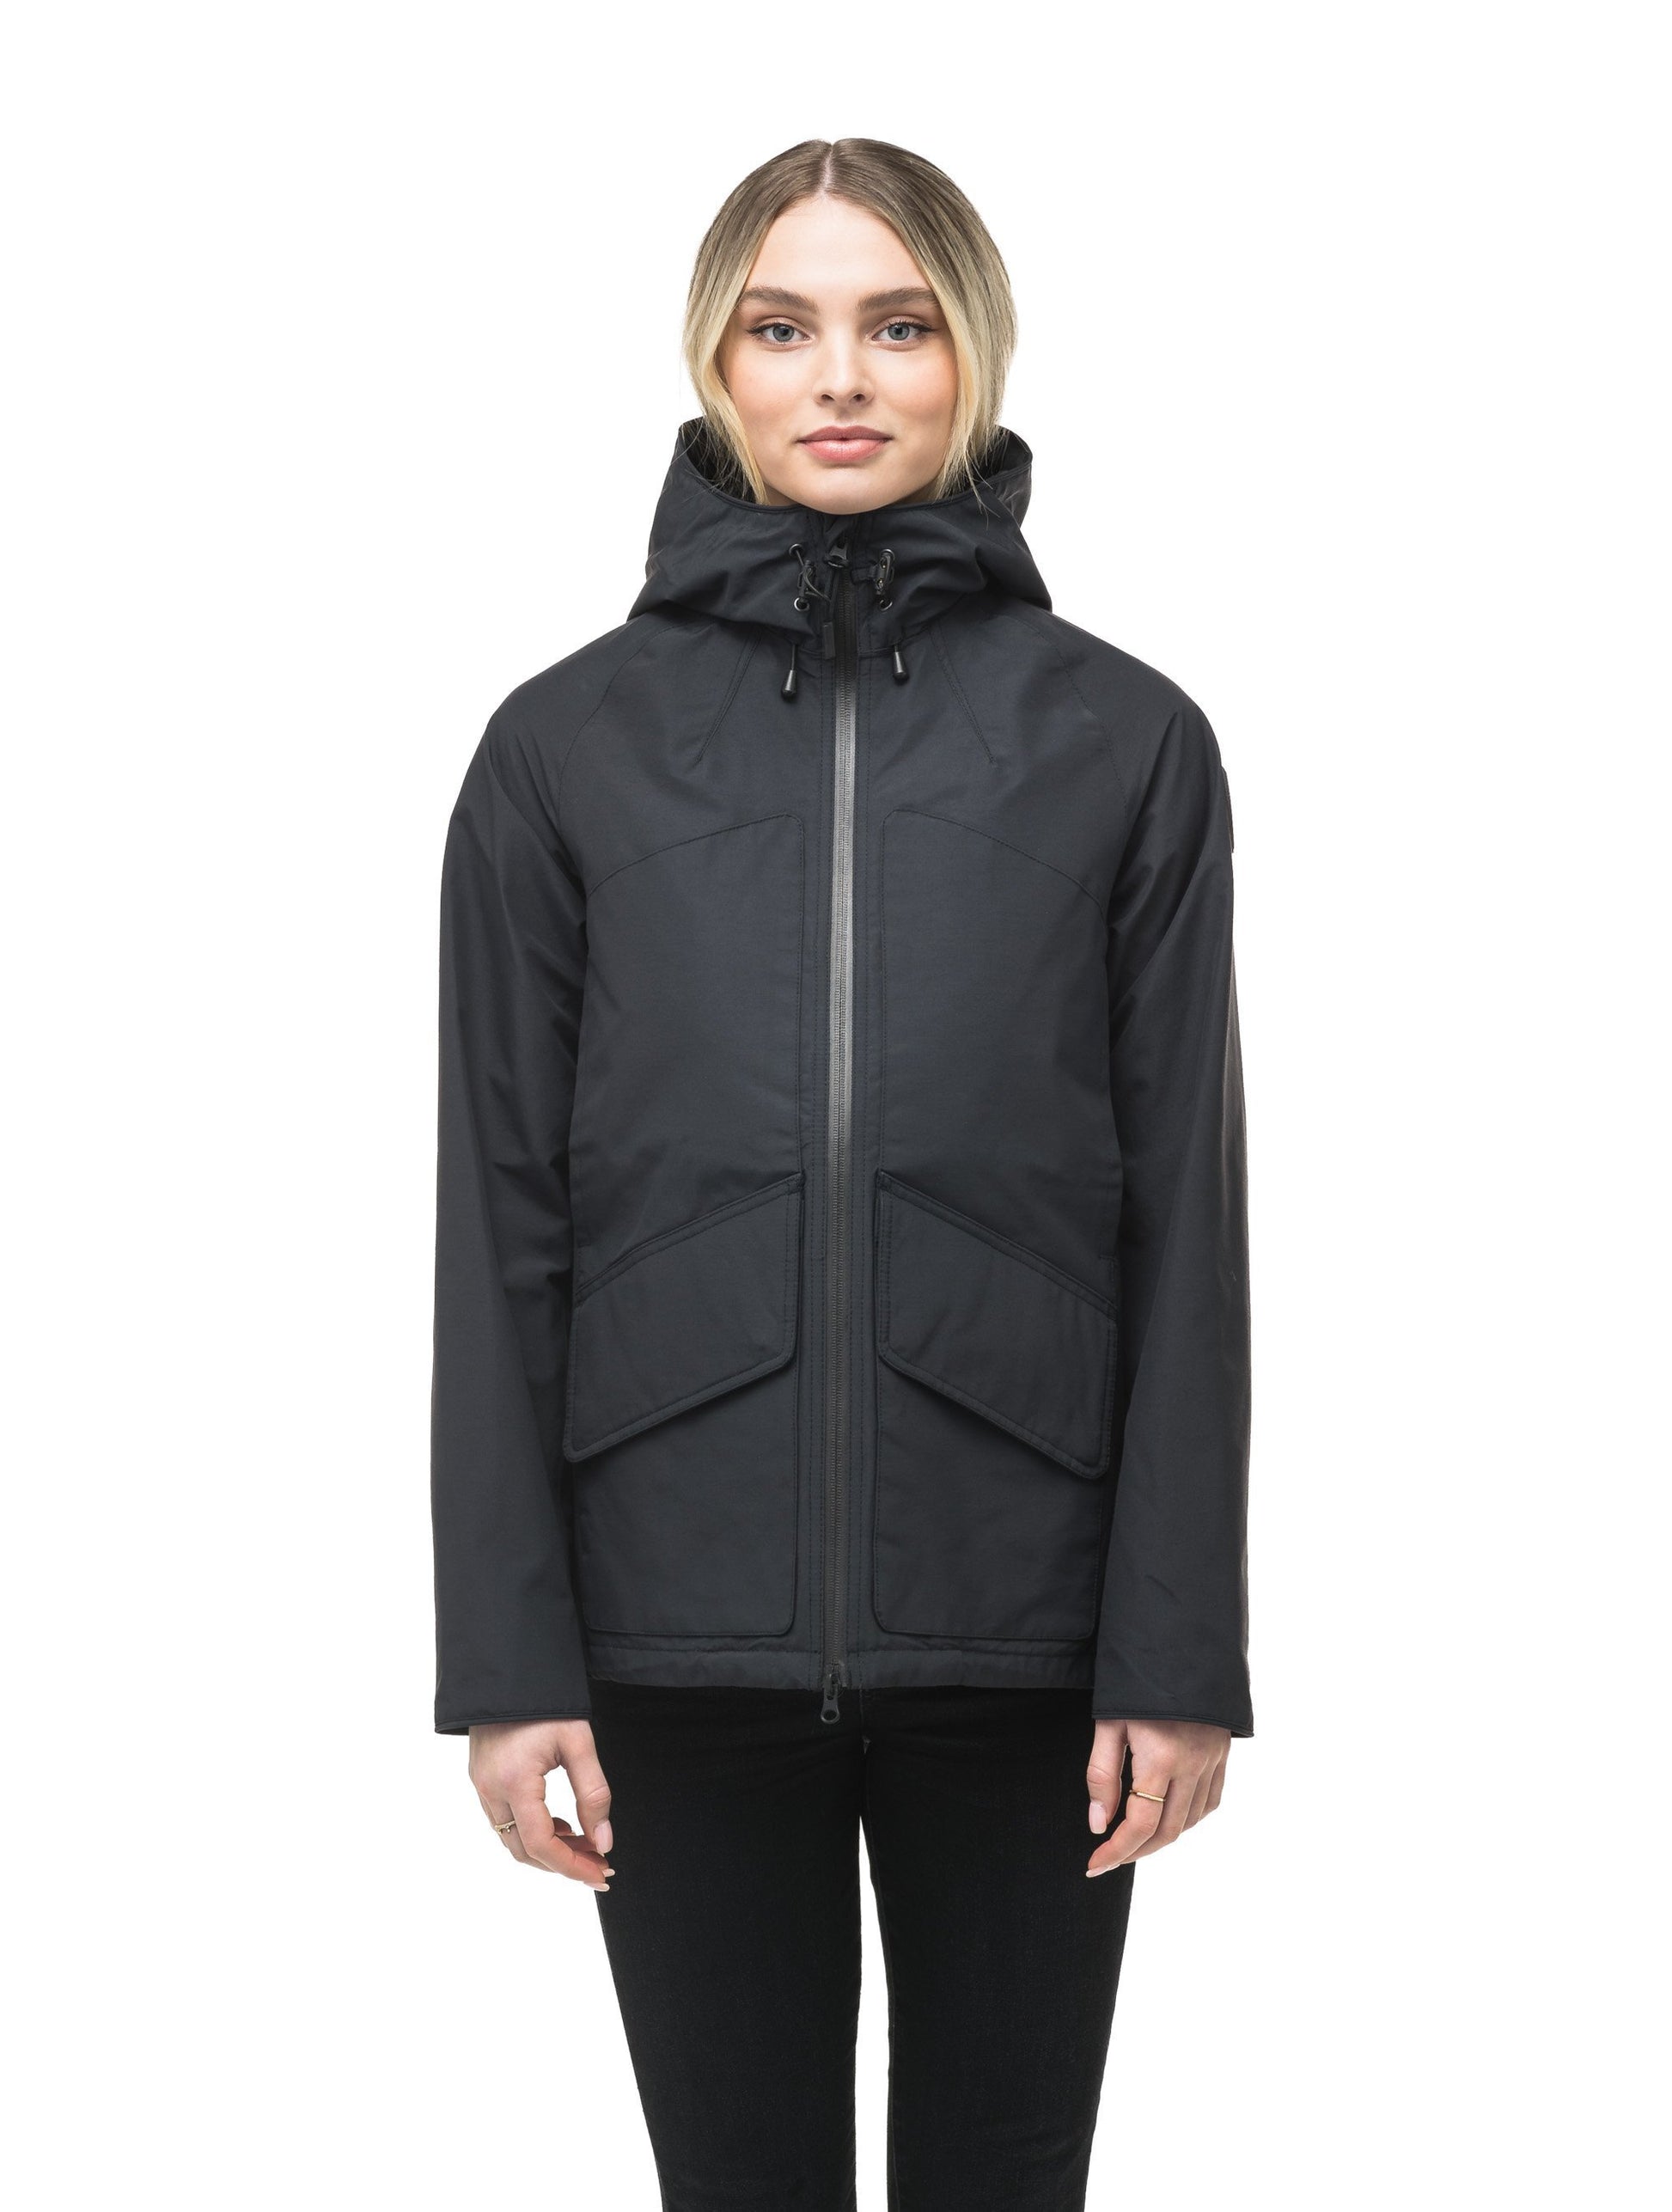 Women's hooded rain jacket with high low hem in Black